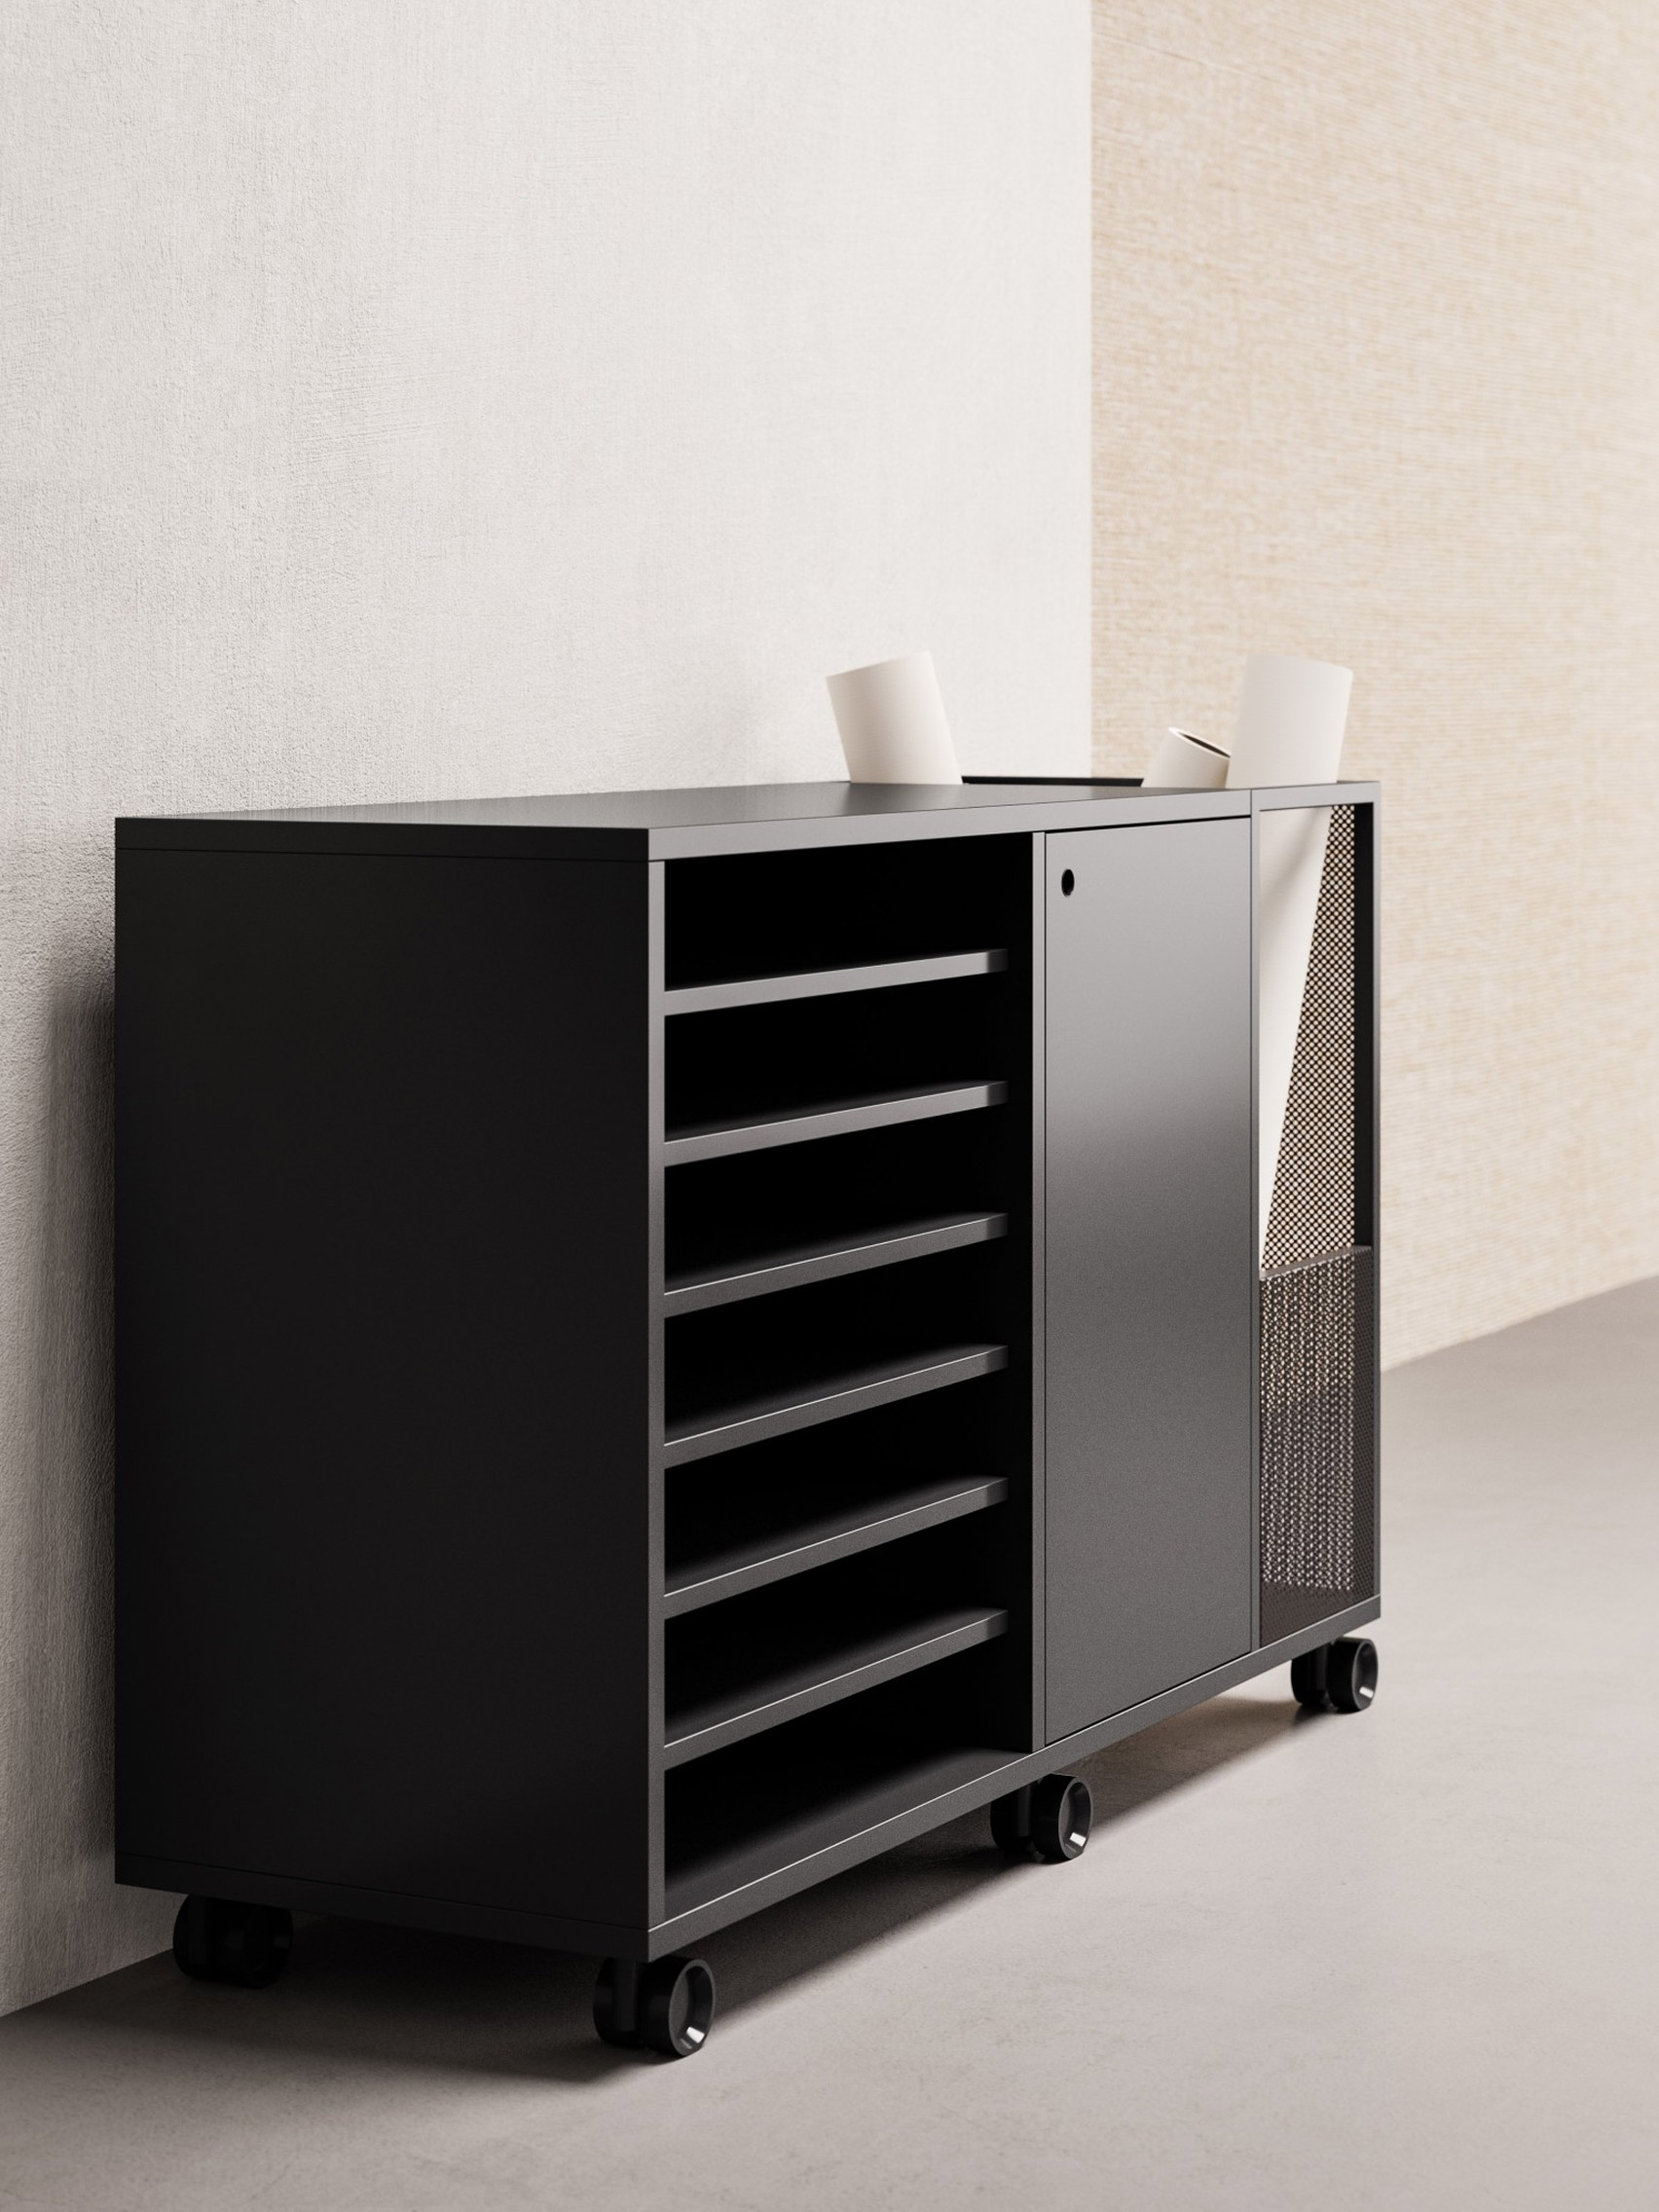 atelier-modular-furniture-system-gensler-workplace-design_dezeen_1704_col_1.jpg